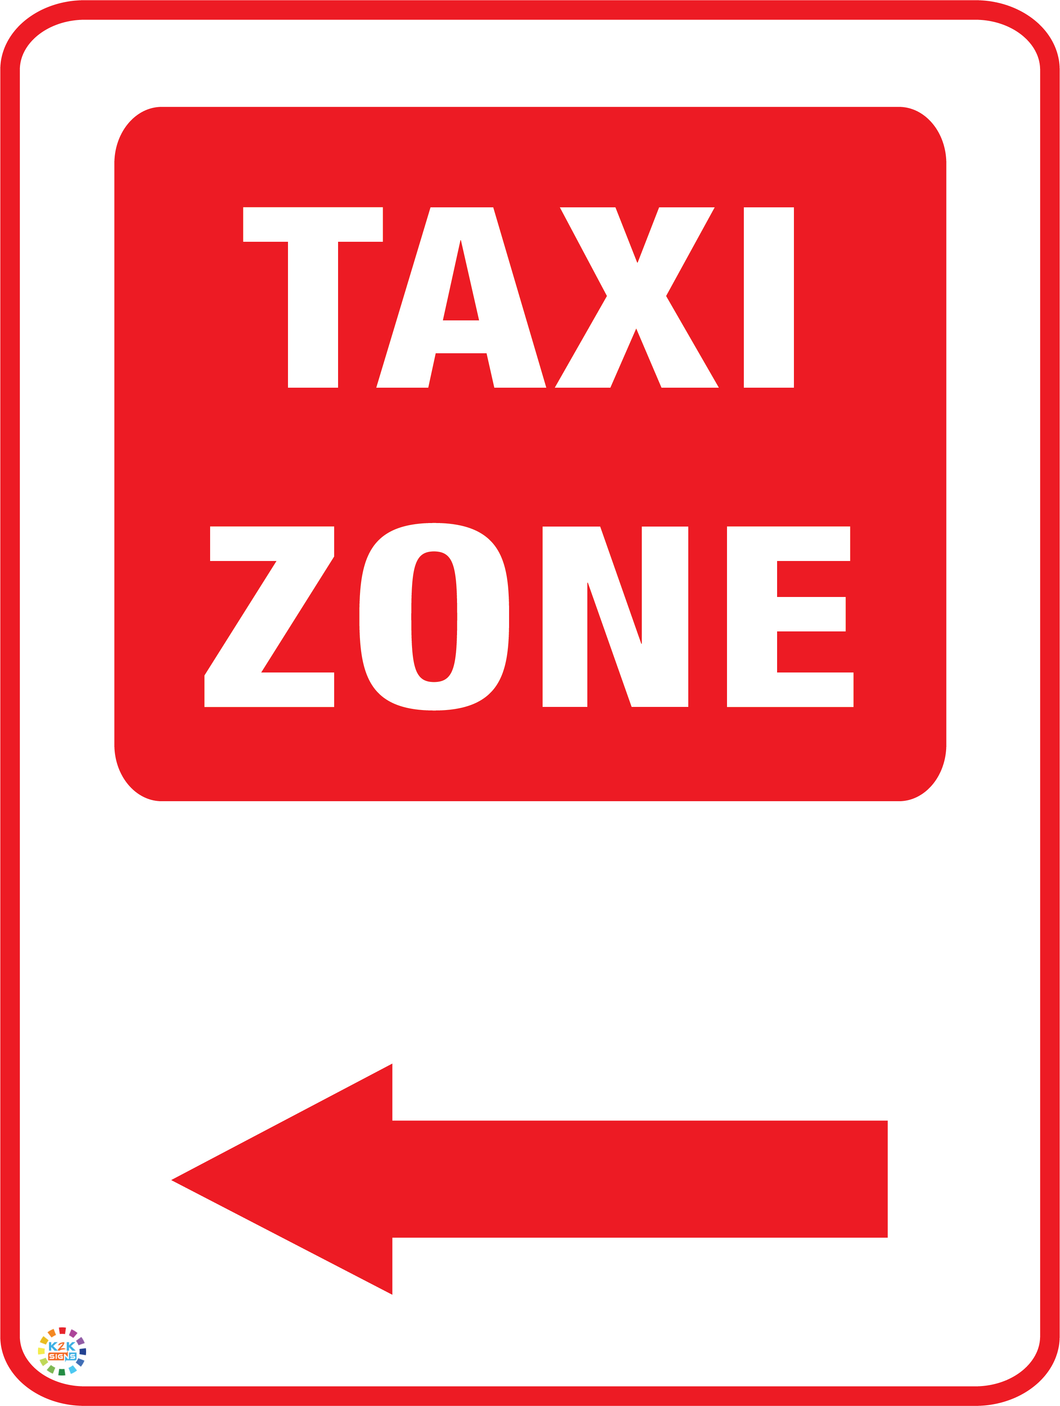 Taxi Zone (Left Arrow) Sign